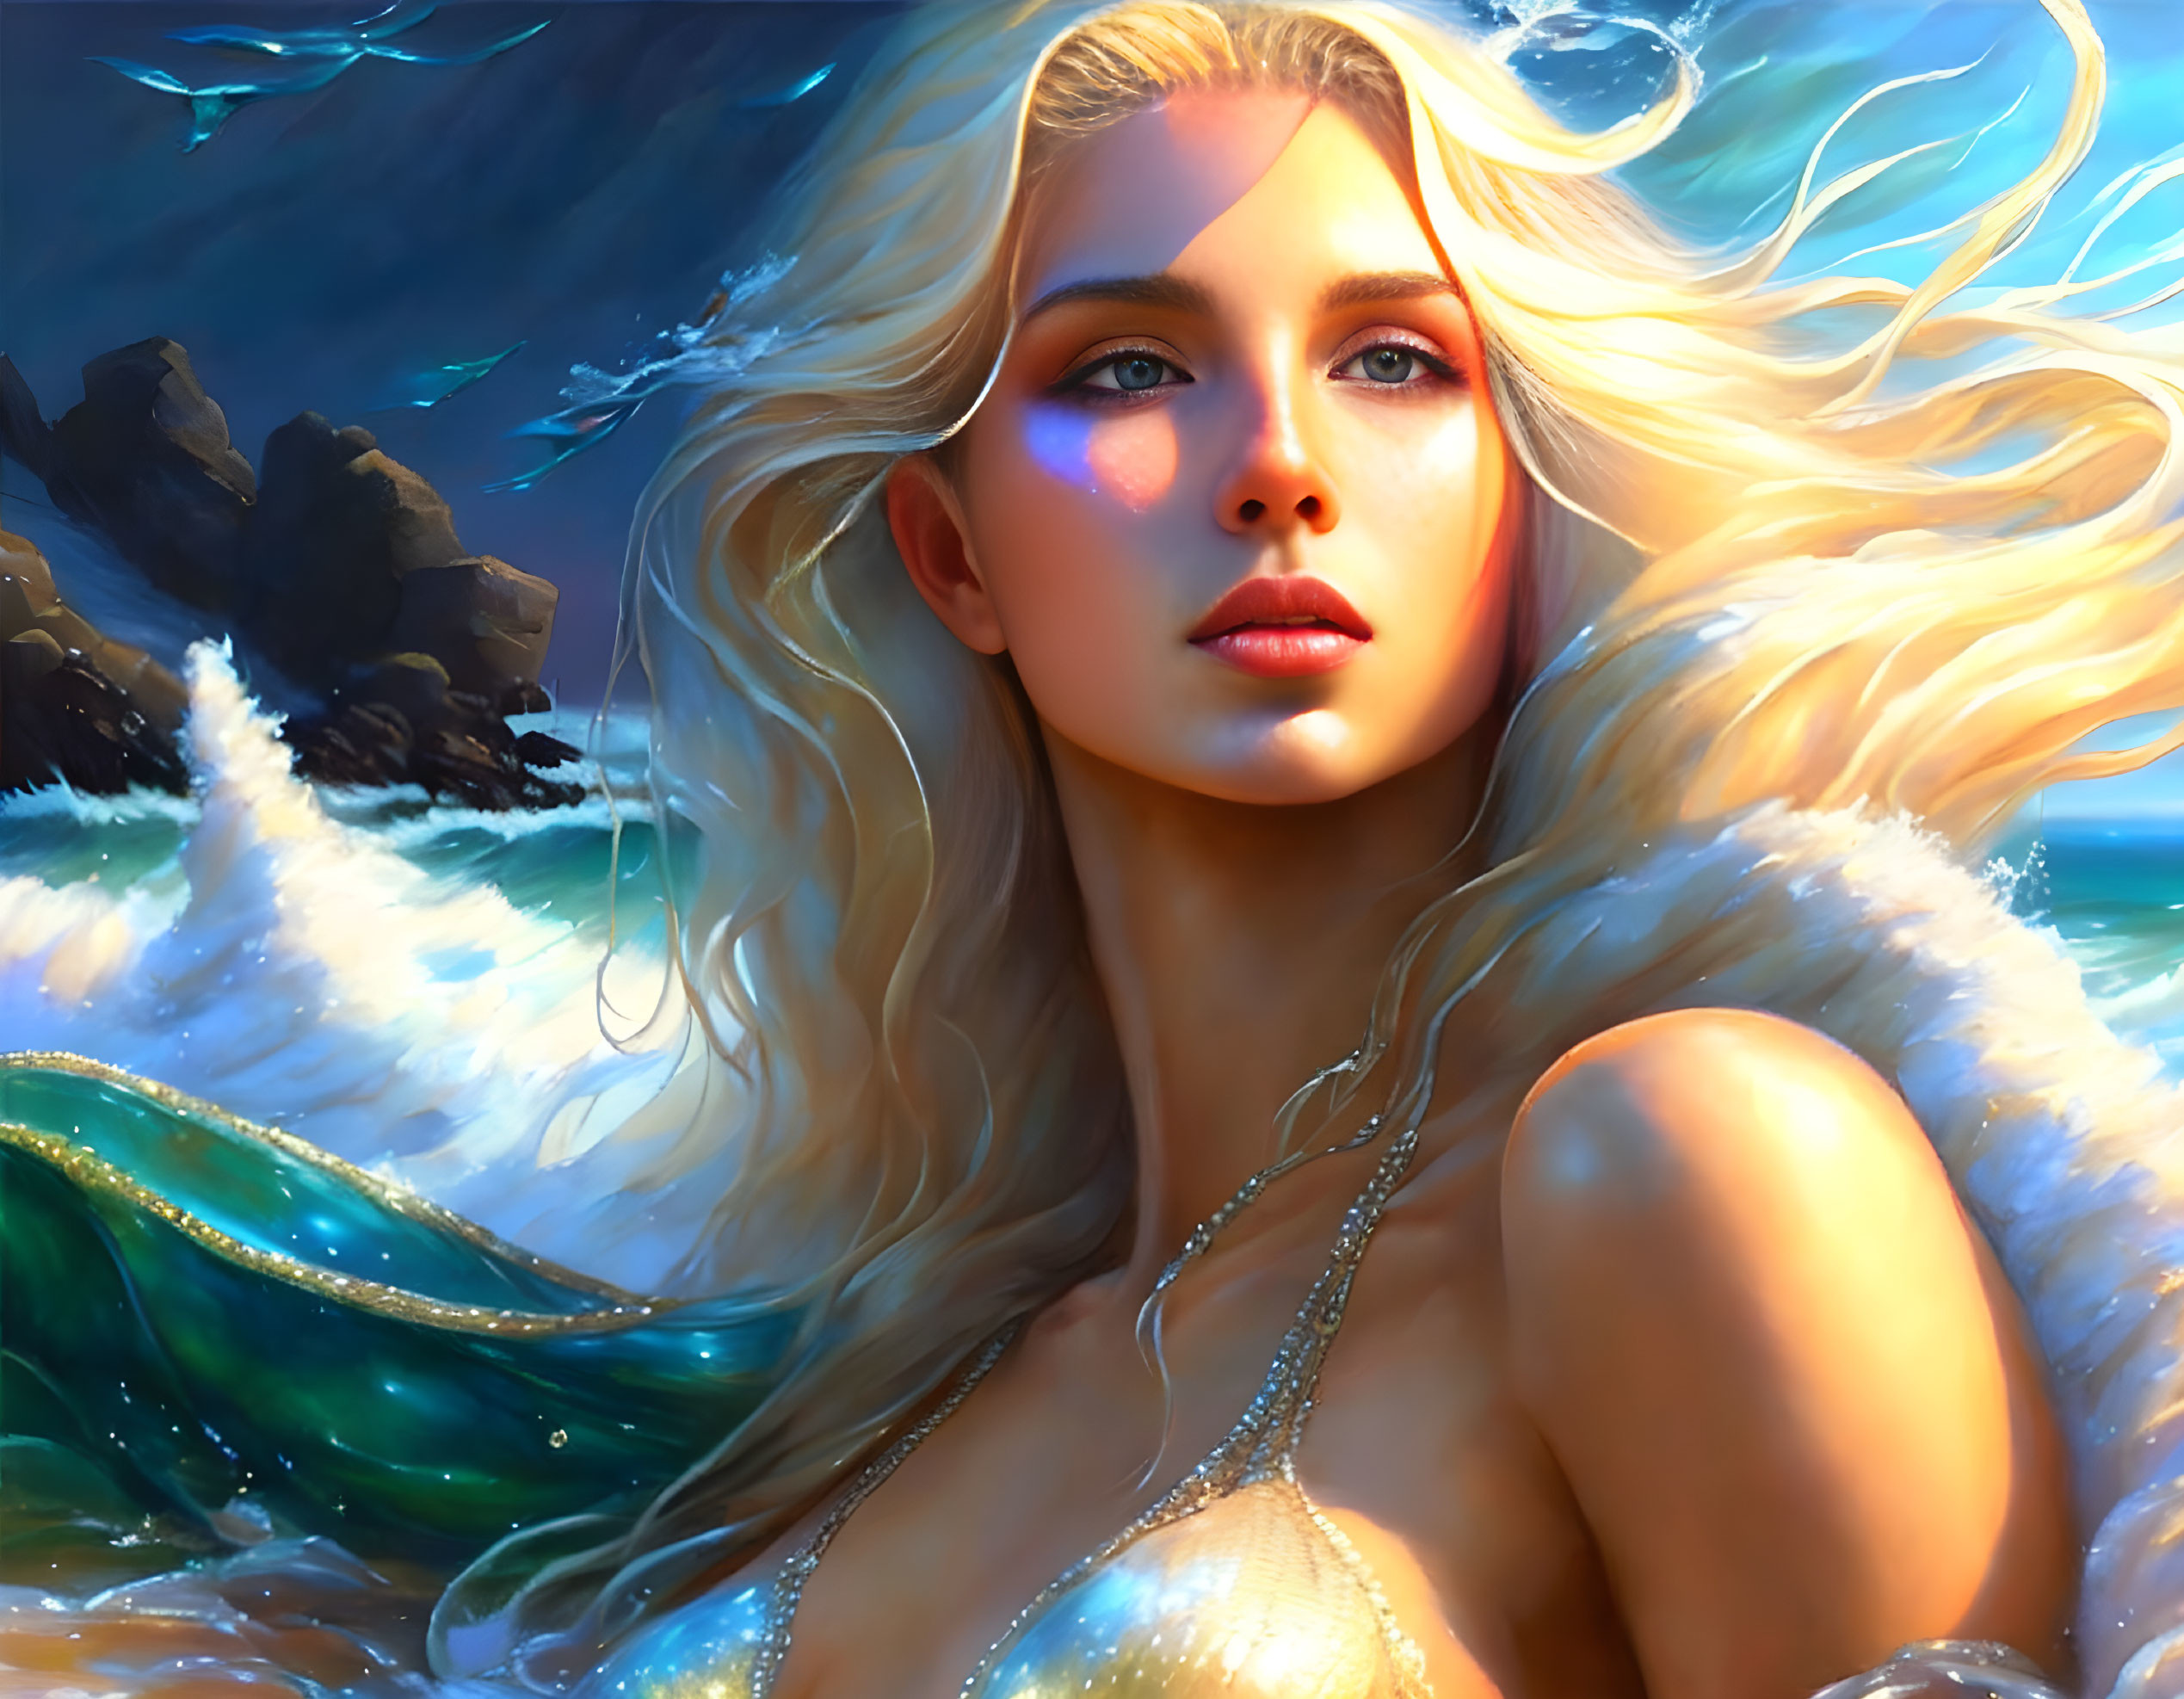 Fantasy digital artwork: Blonde woman in ocean scene